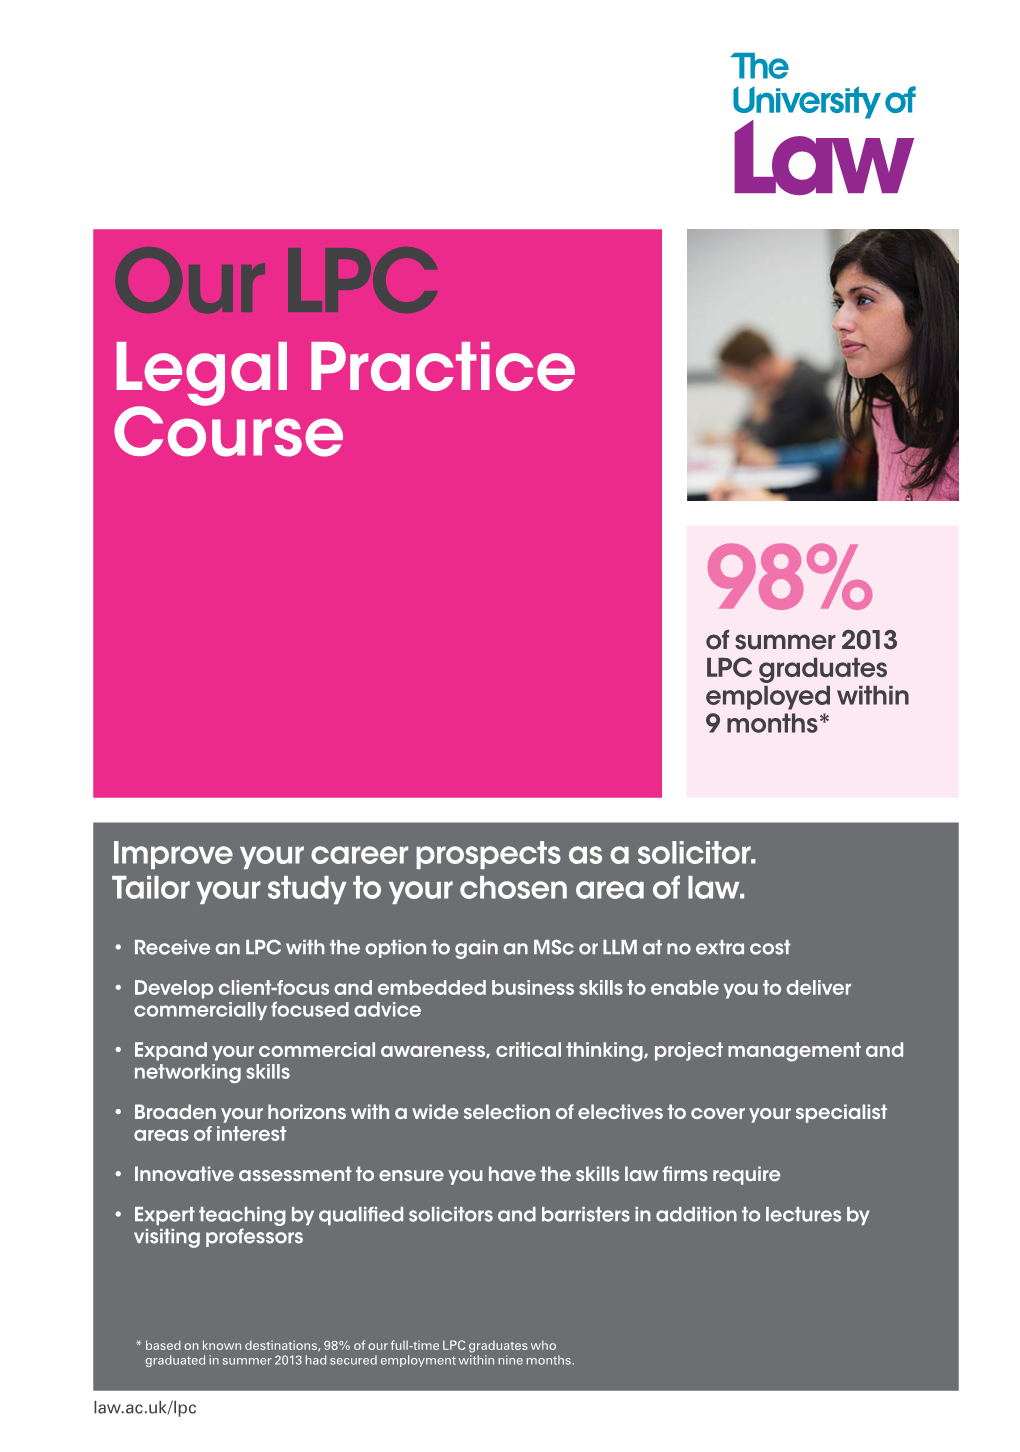 Our LPC Legal Practice Course 98% of Summer 2013 LPC Graduates Employed Within 9 Months*